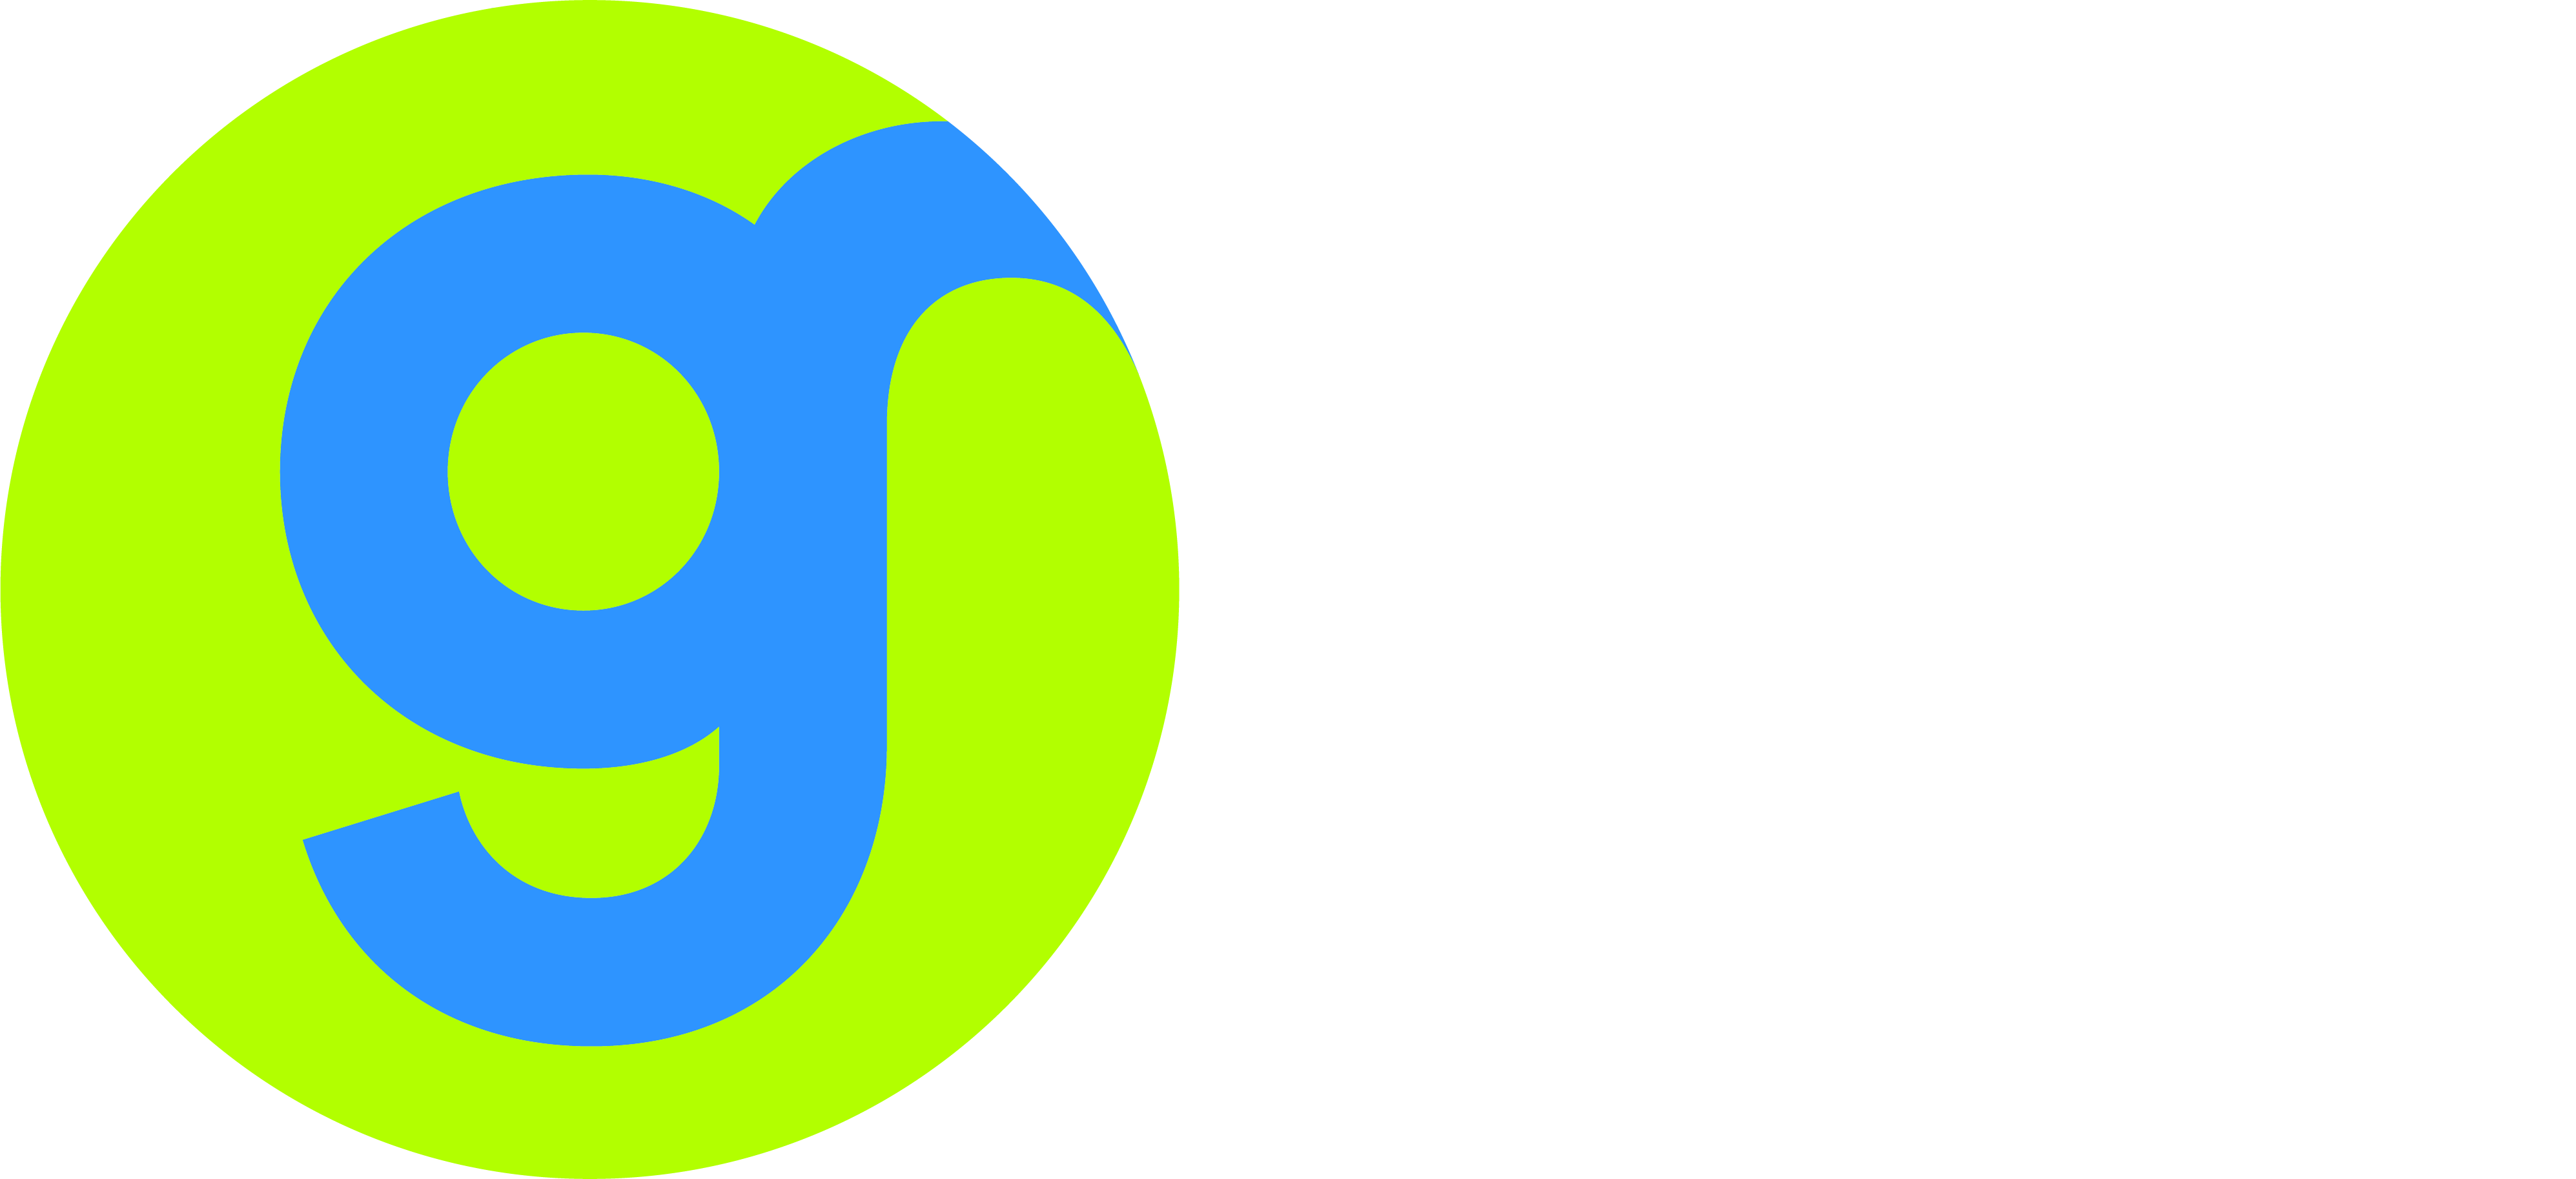 the gym group investor presentation